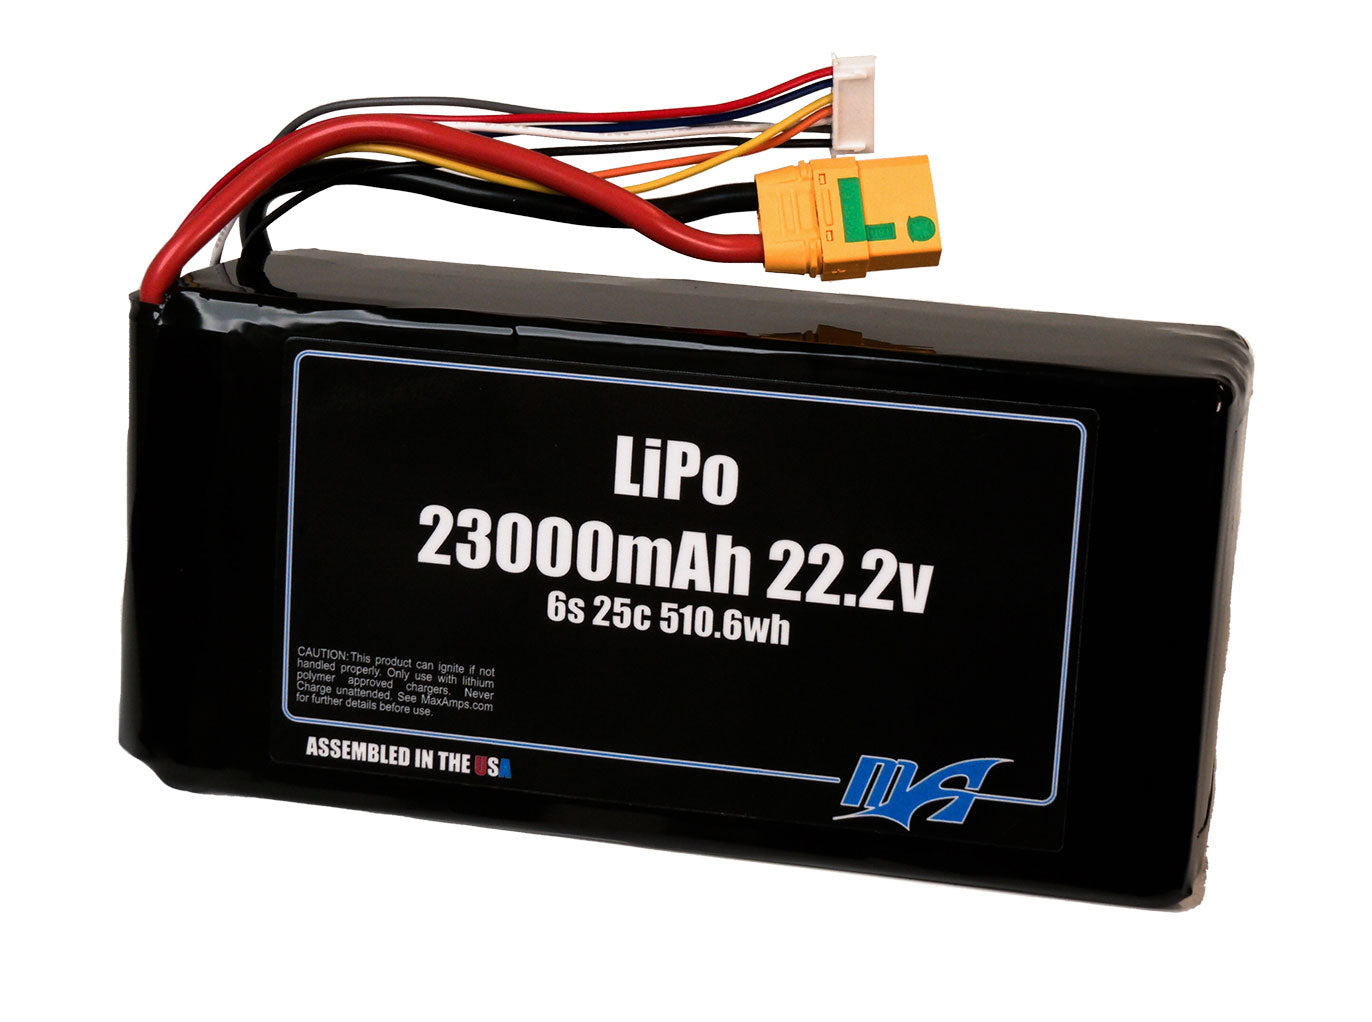 LiPo 23000 6S 22.2v Smart Battery Pack With XT90 Anti-Spark Female